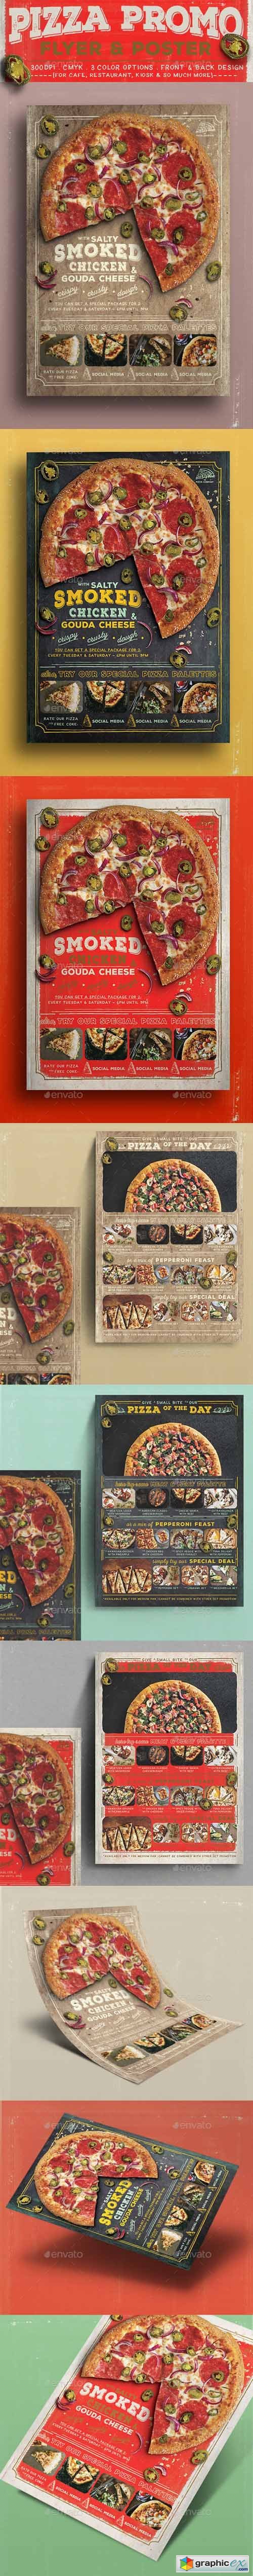 Pizza Promo Flyer